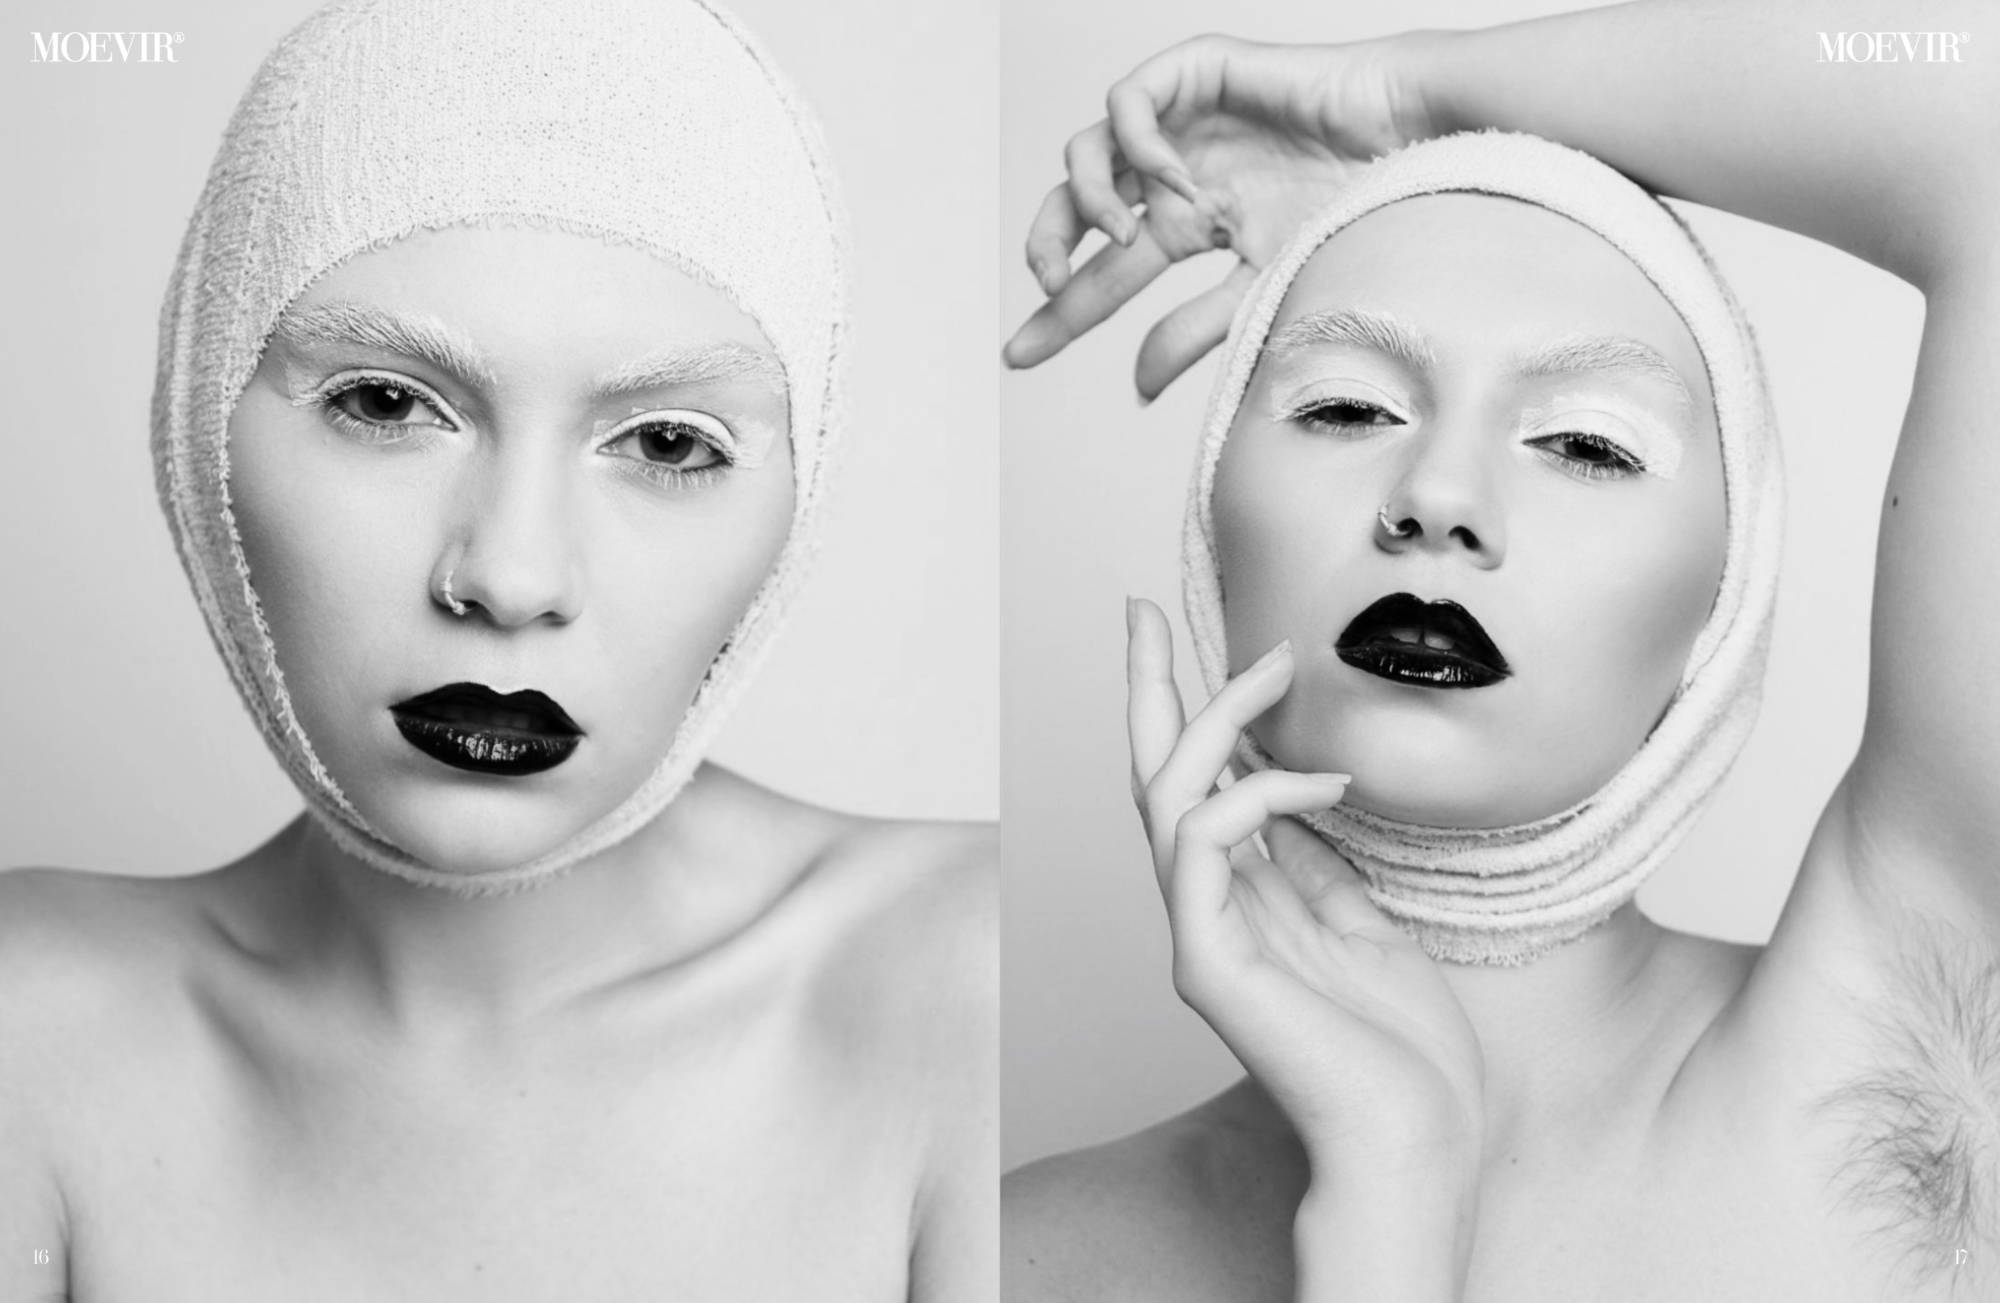 Wolfish beauty | Moevir Magazine alona dmytrenko sheffield makeup artist